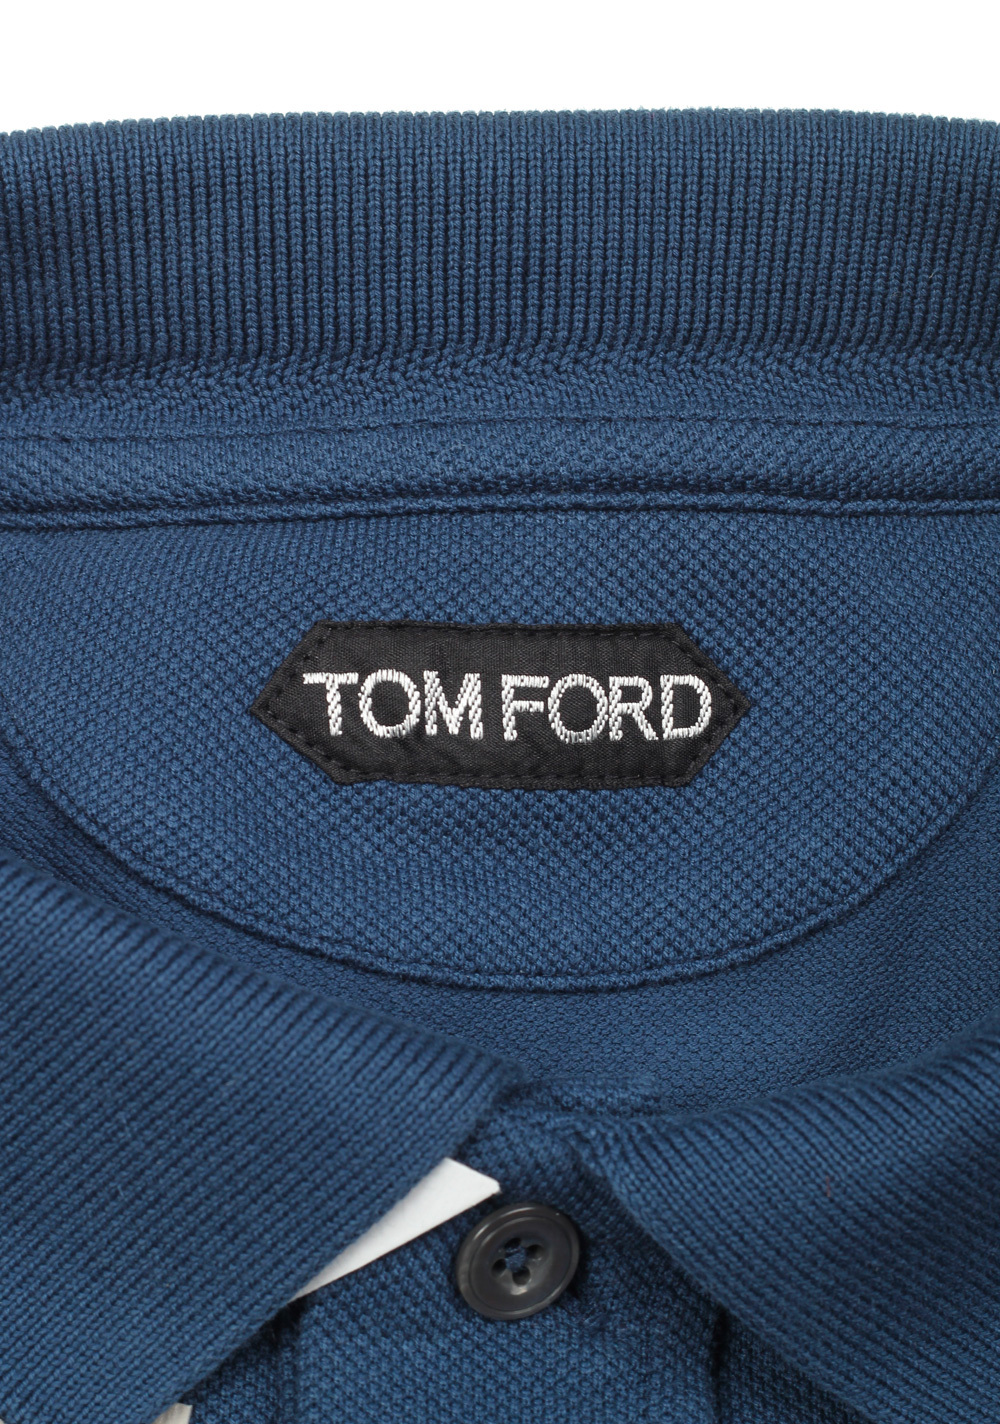 TOM FORD Blue Piquet Short Sleeve Polo Shirt Size 52 / 42R U.S. | Costume Limité